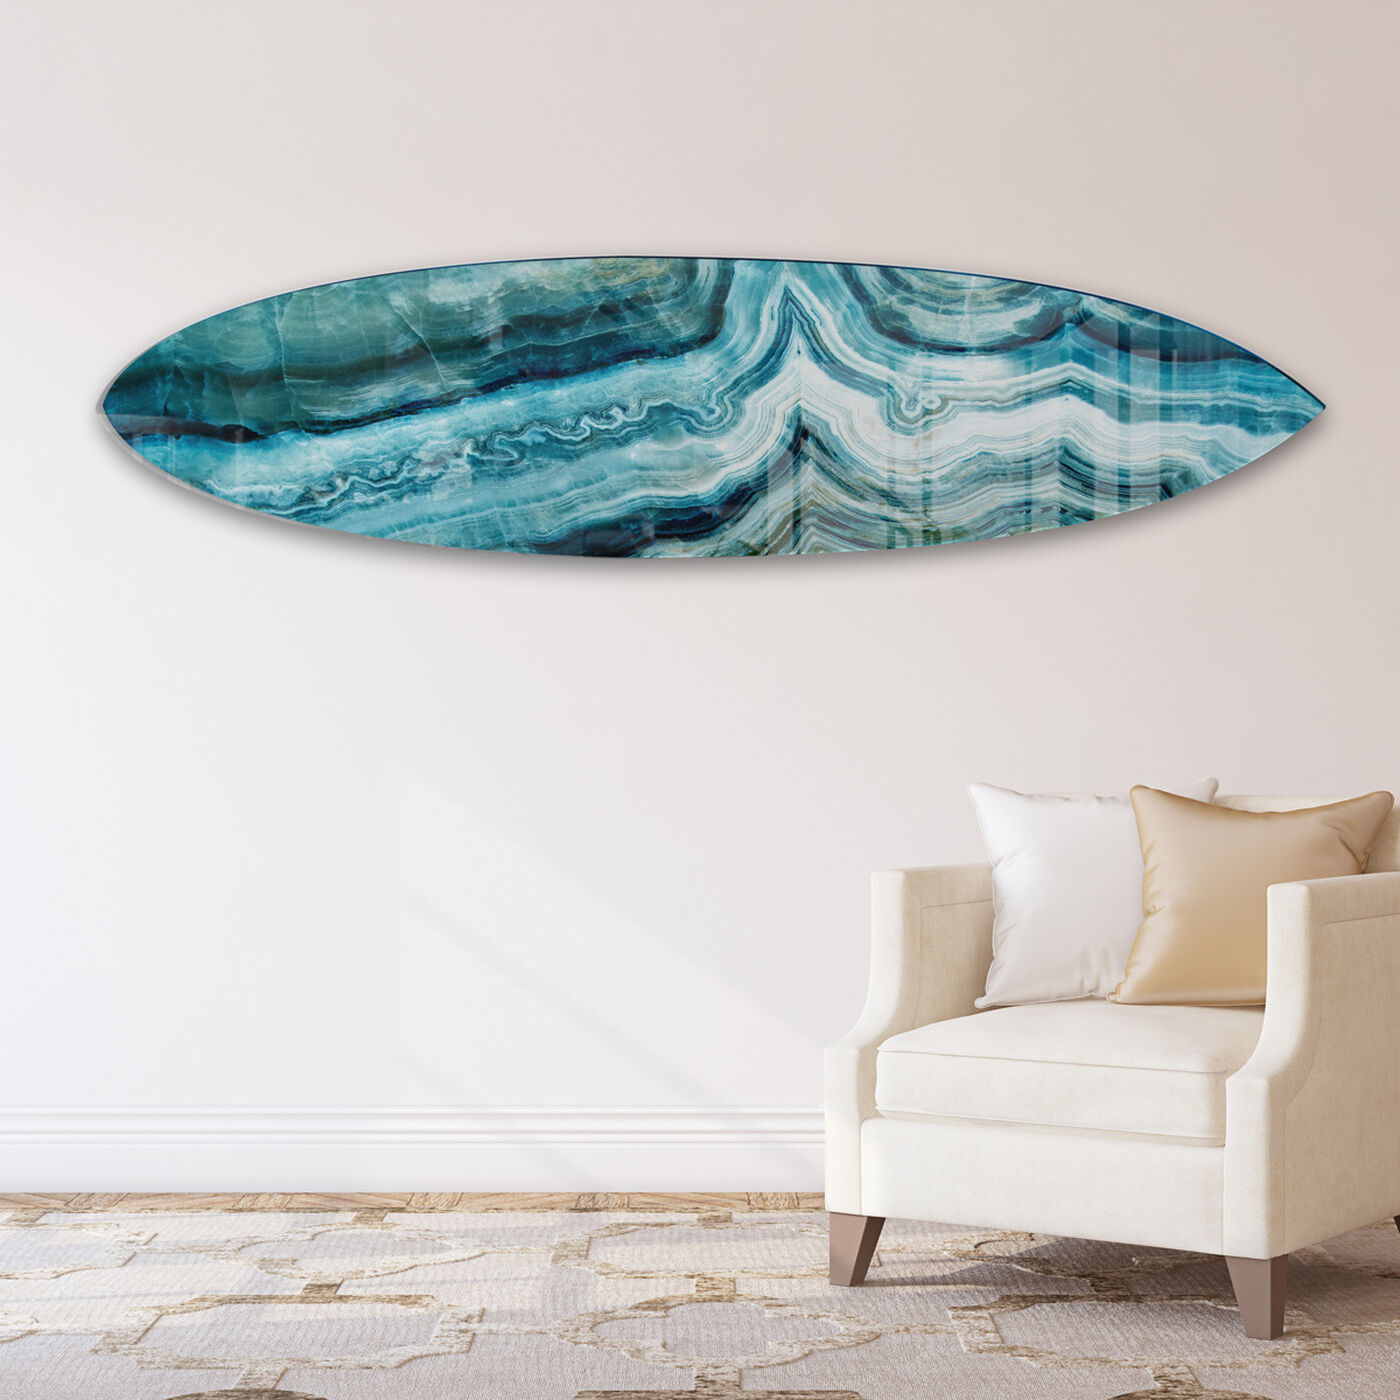 chanel surfer girl wall art